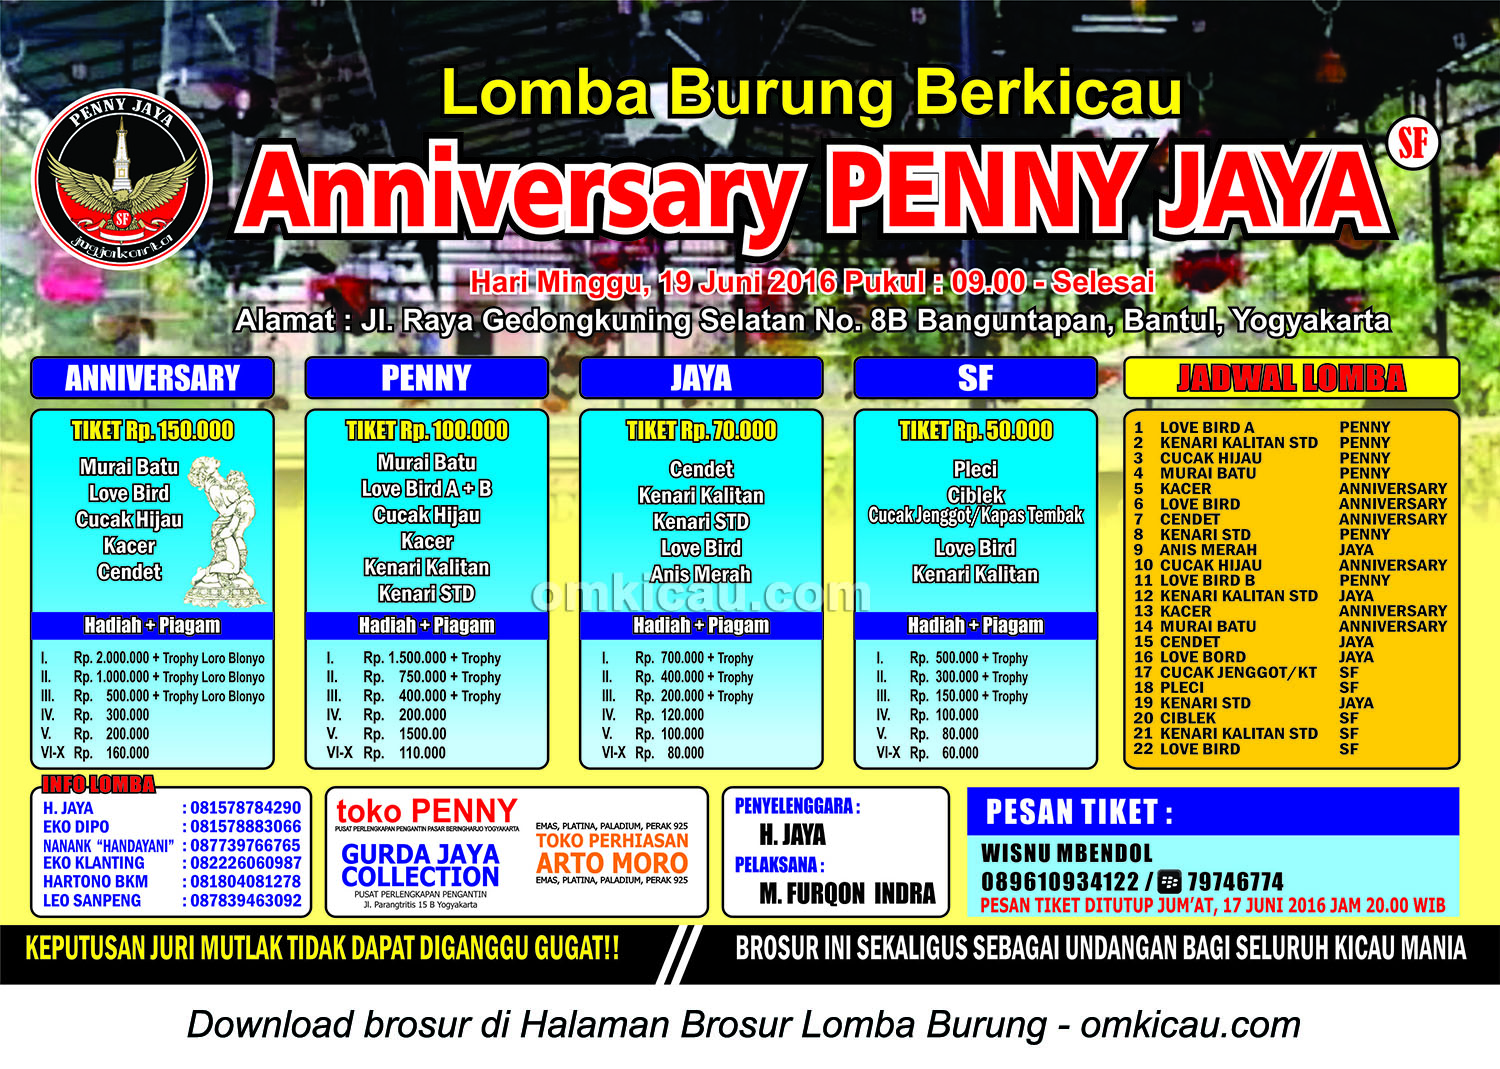 Brosur Lomba Burung Berkicau Anniversary Penny Jaya, Jogja, 19 Juni 2016